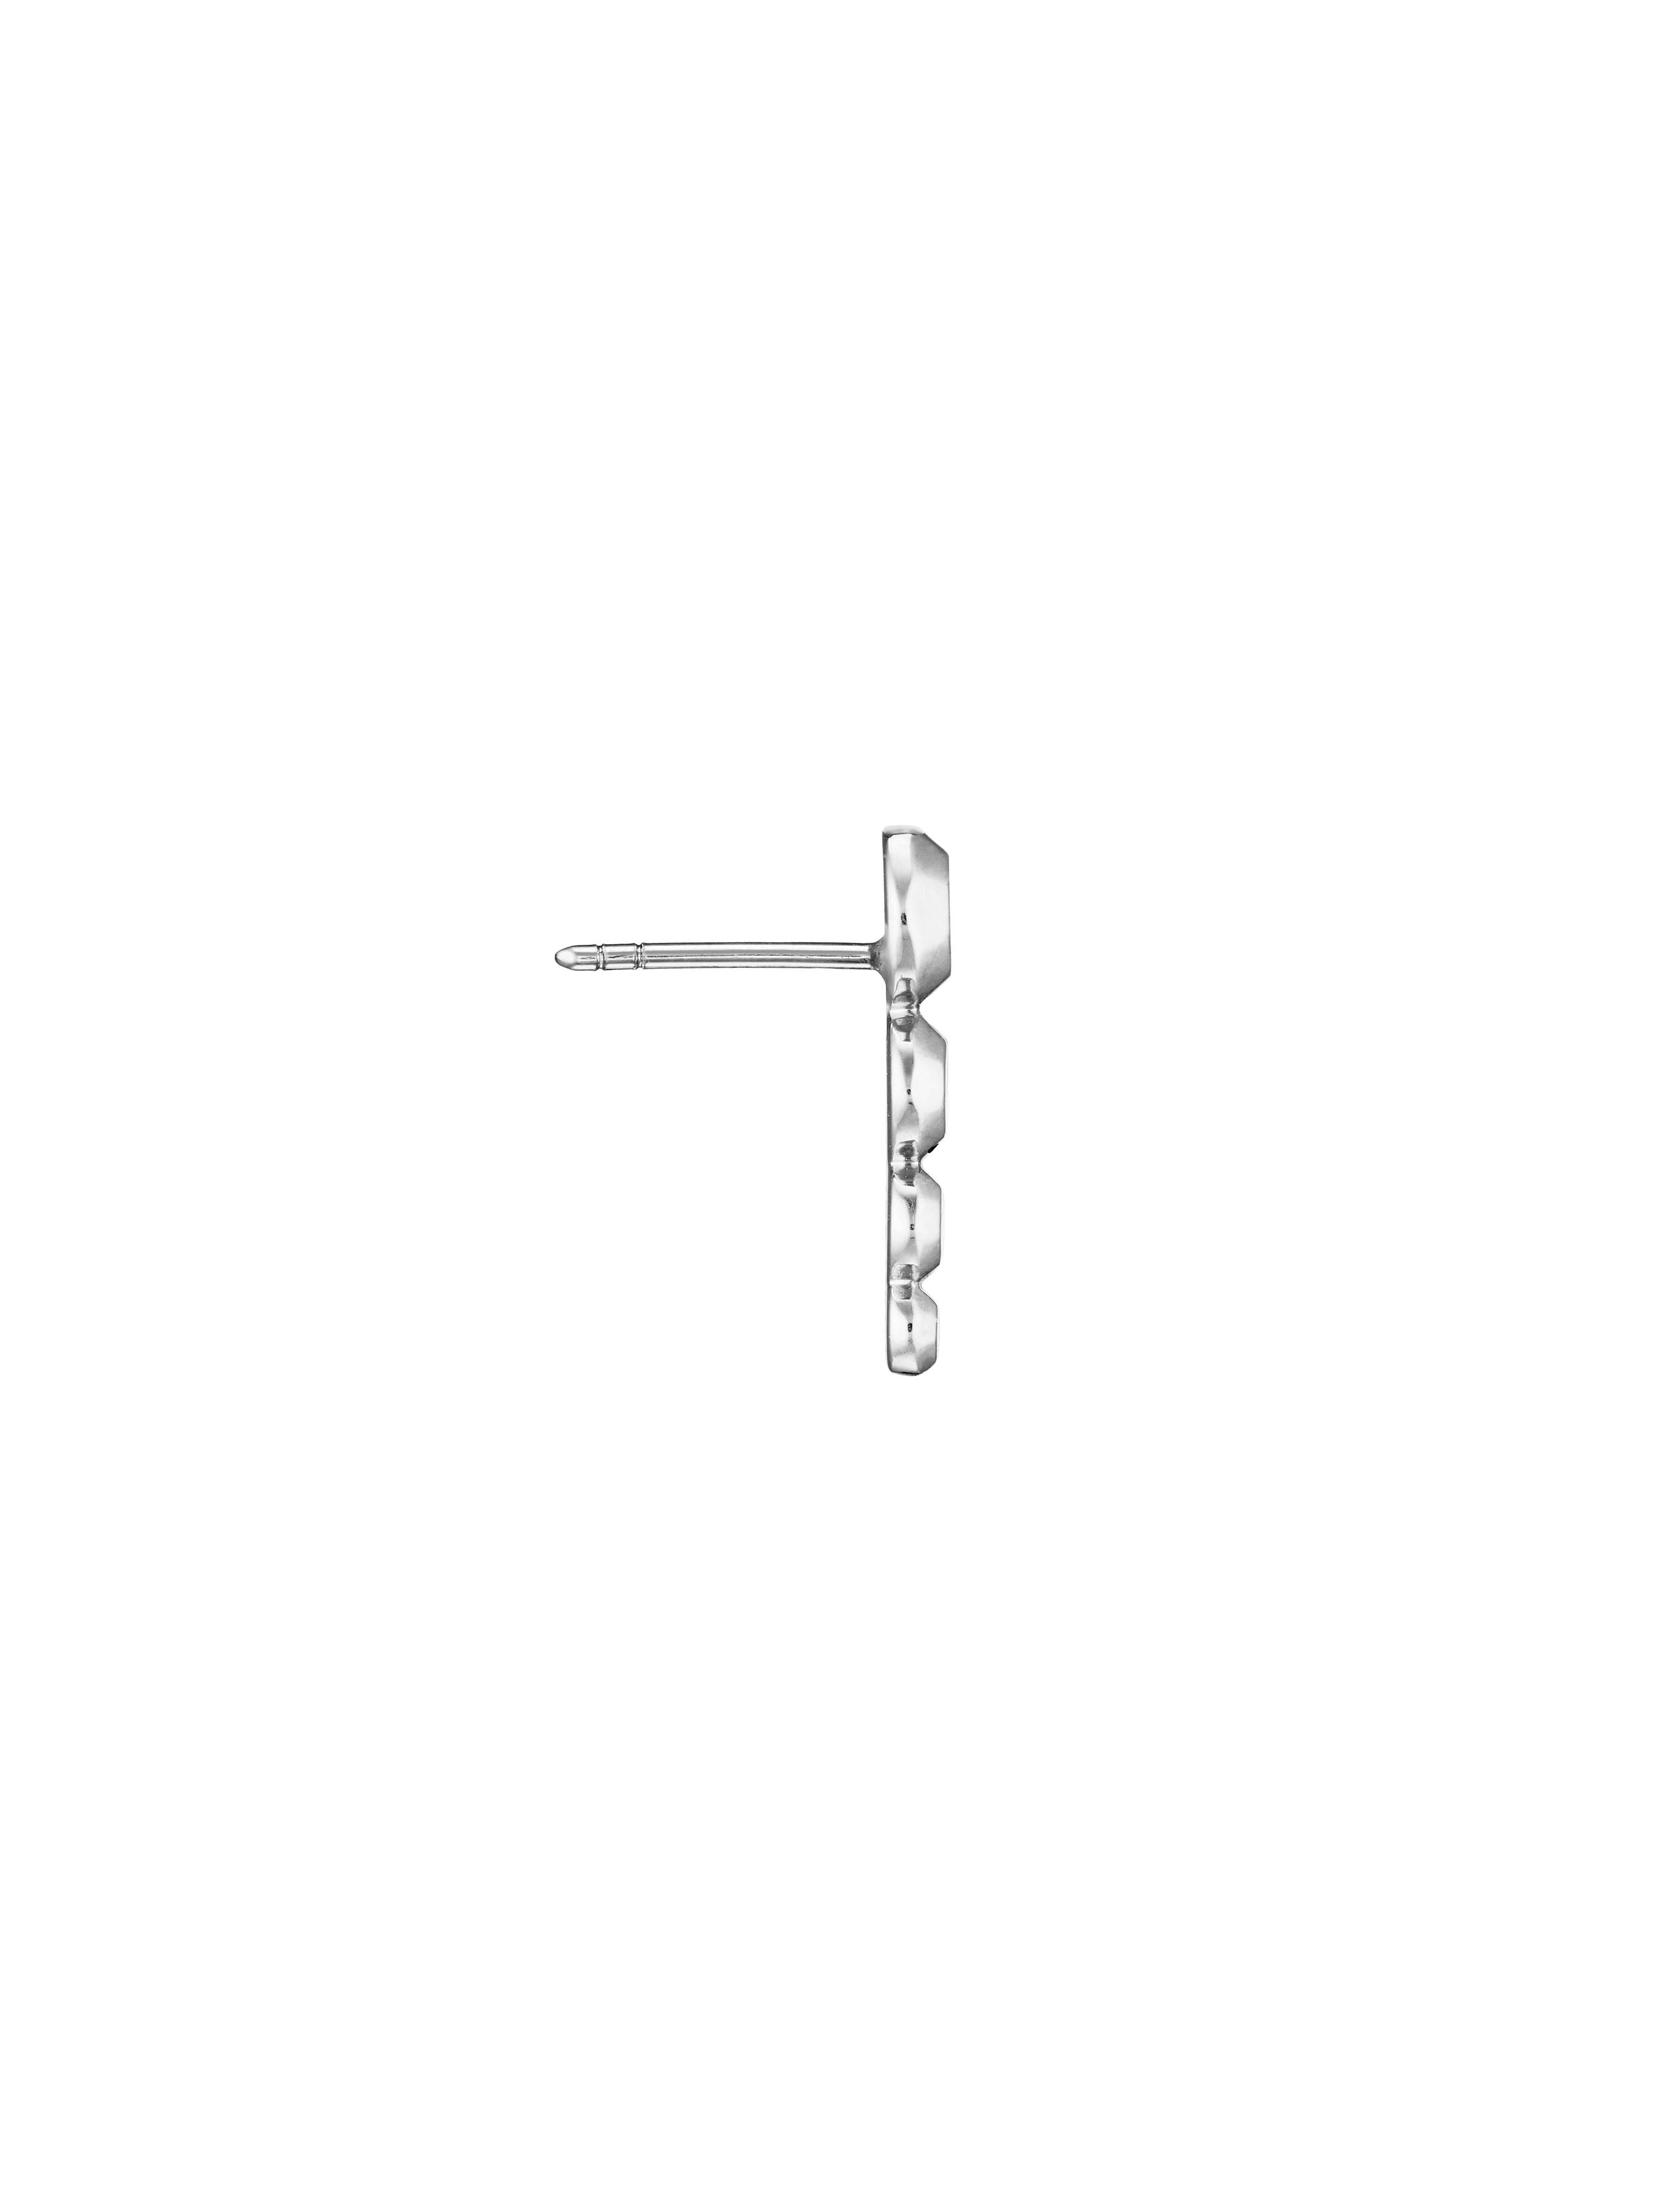 KINRADEN APS AT NIGHTFALL Earring - sterling silver Earrings